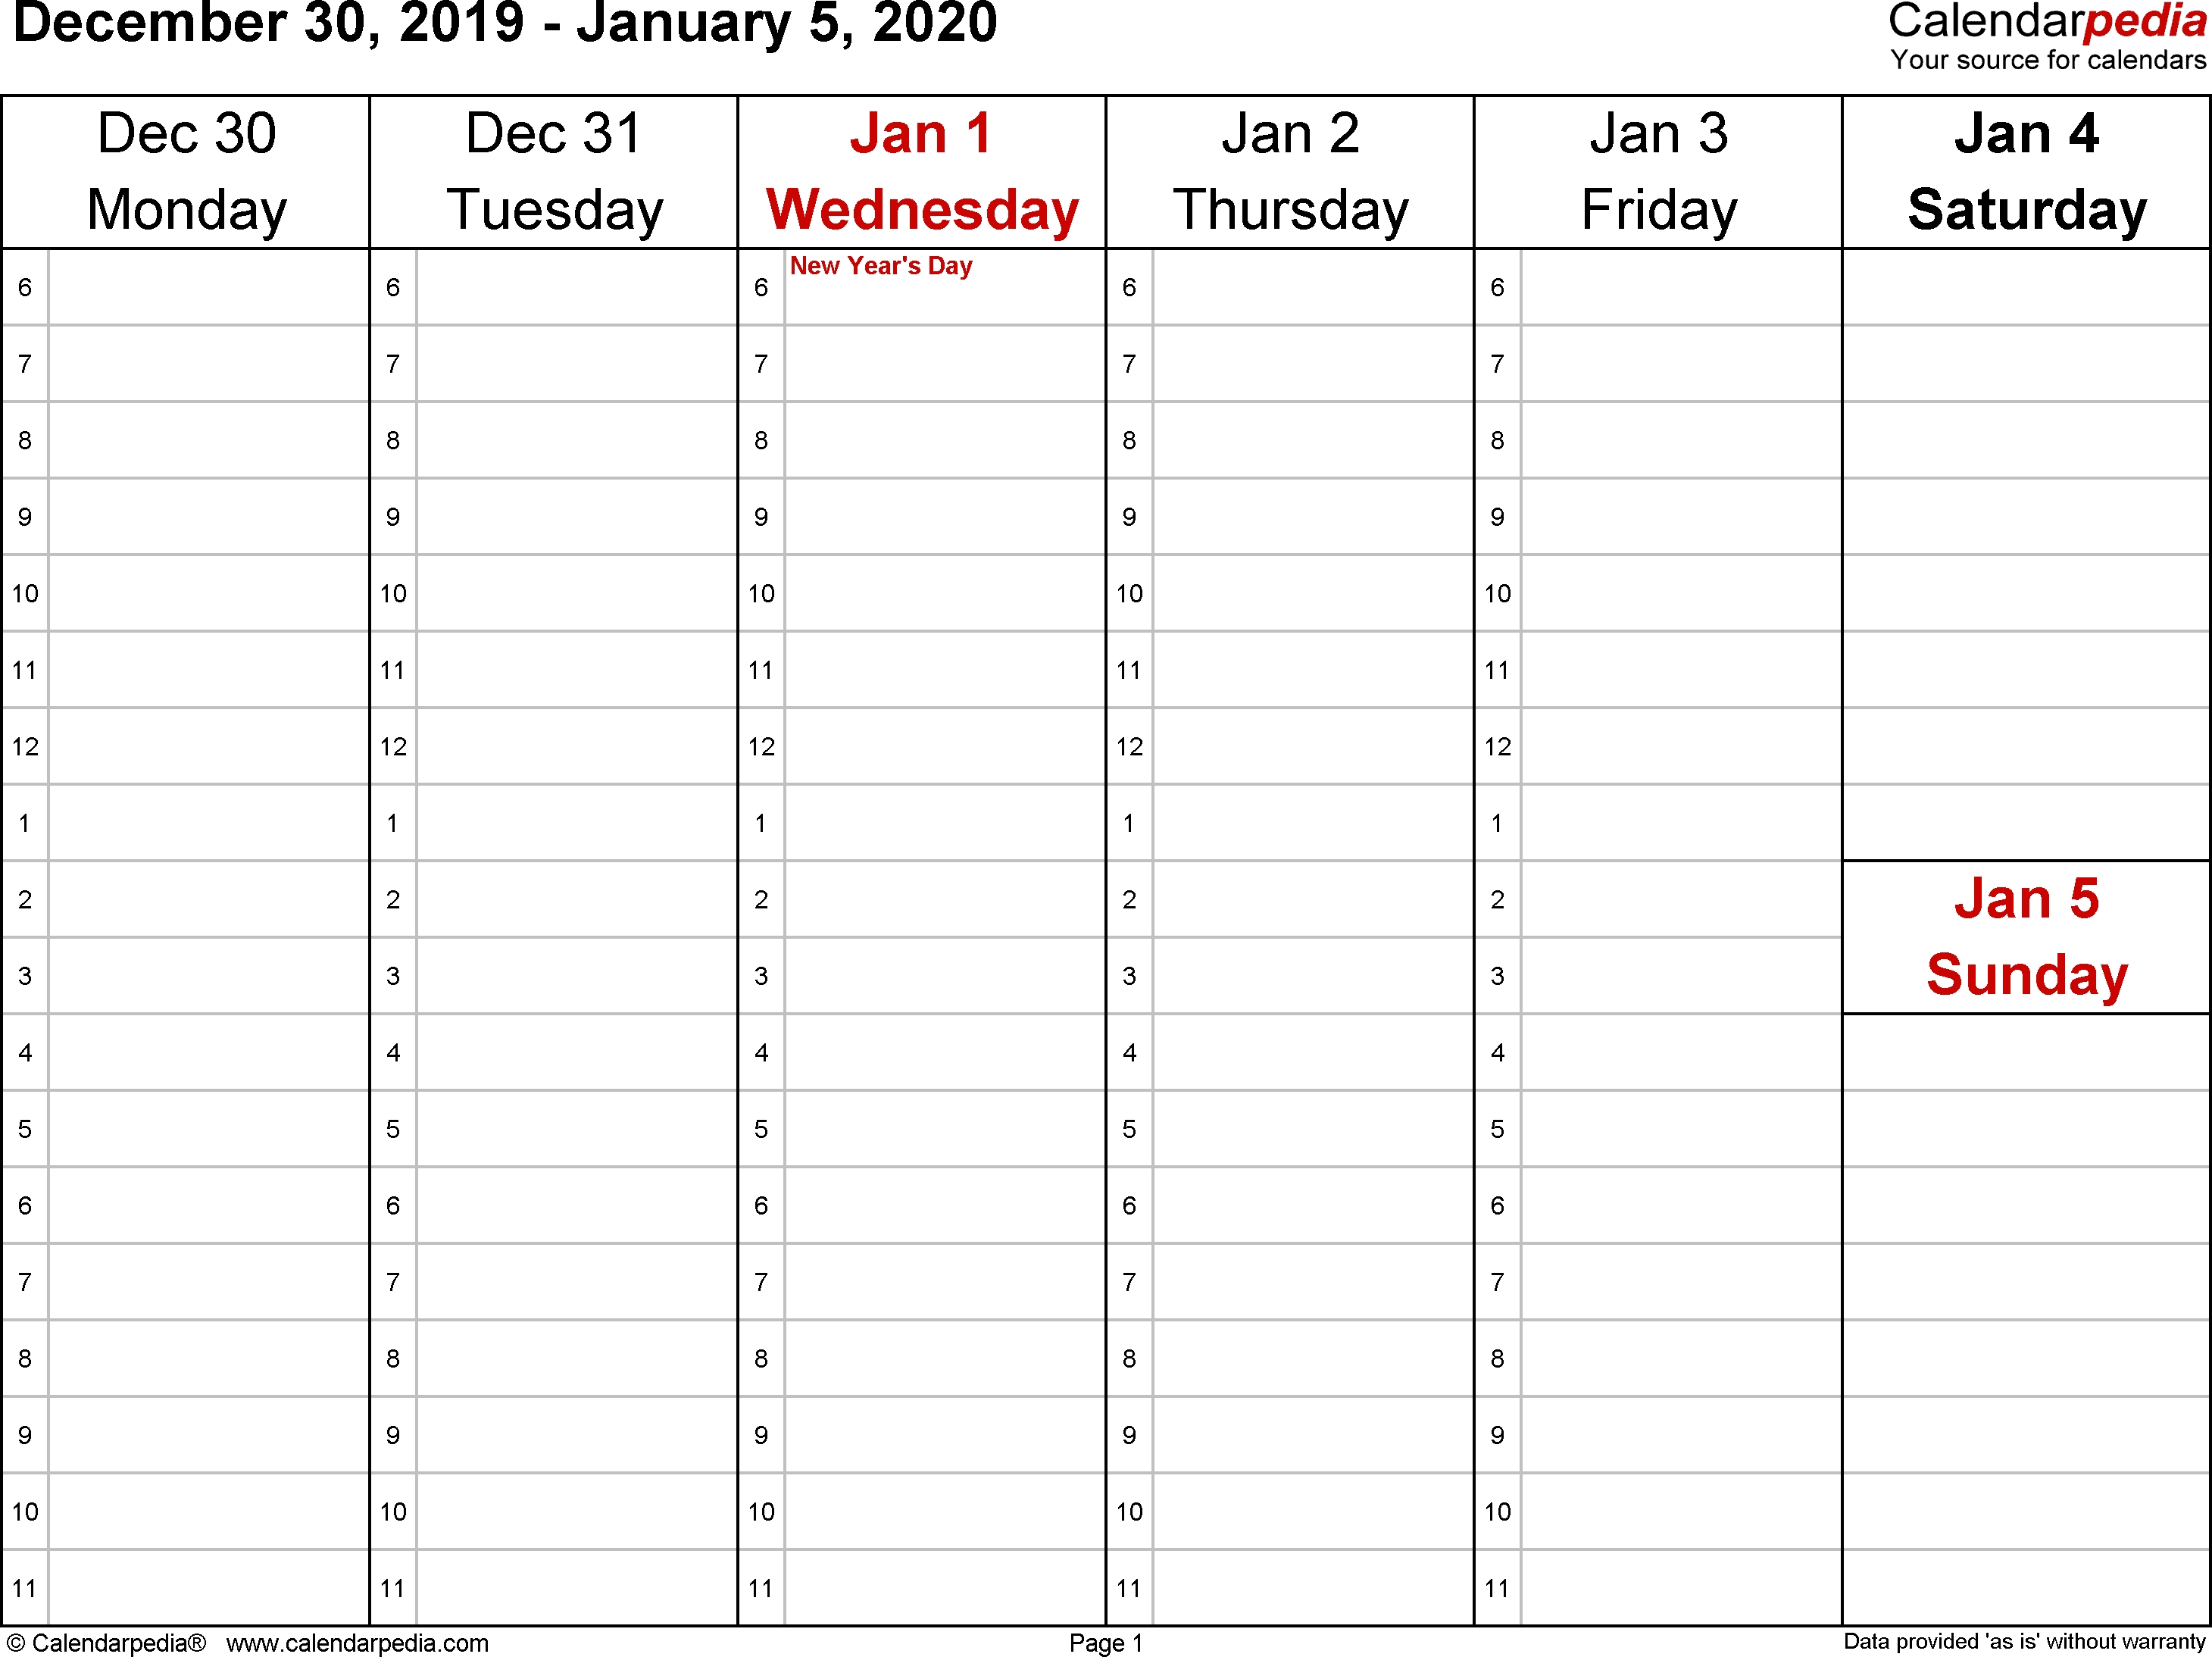 Weekly Calendar 2020 For Word - 12 Free Printable Templates-Blank 5 Day Calendar 2020